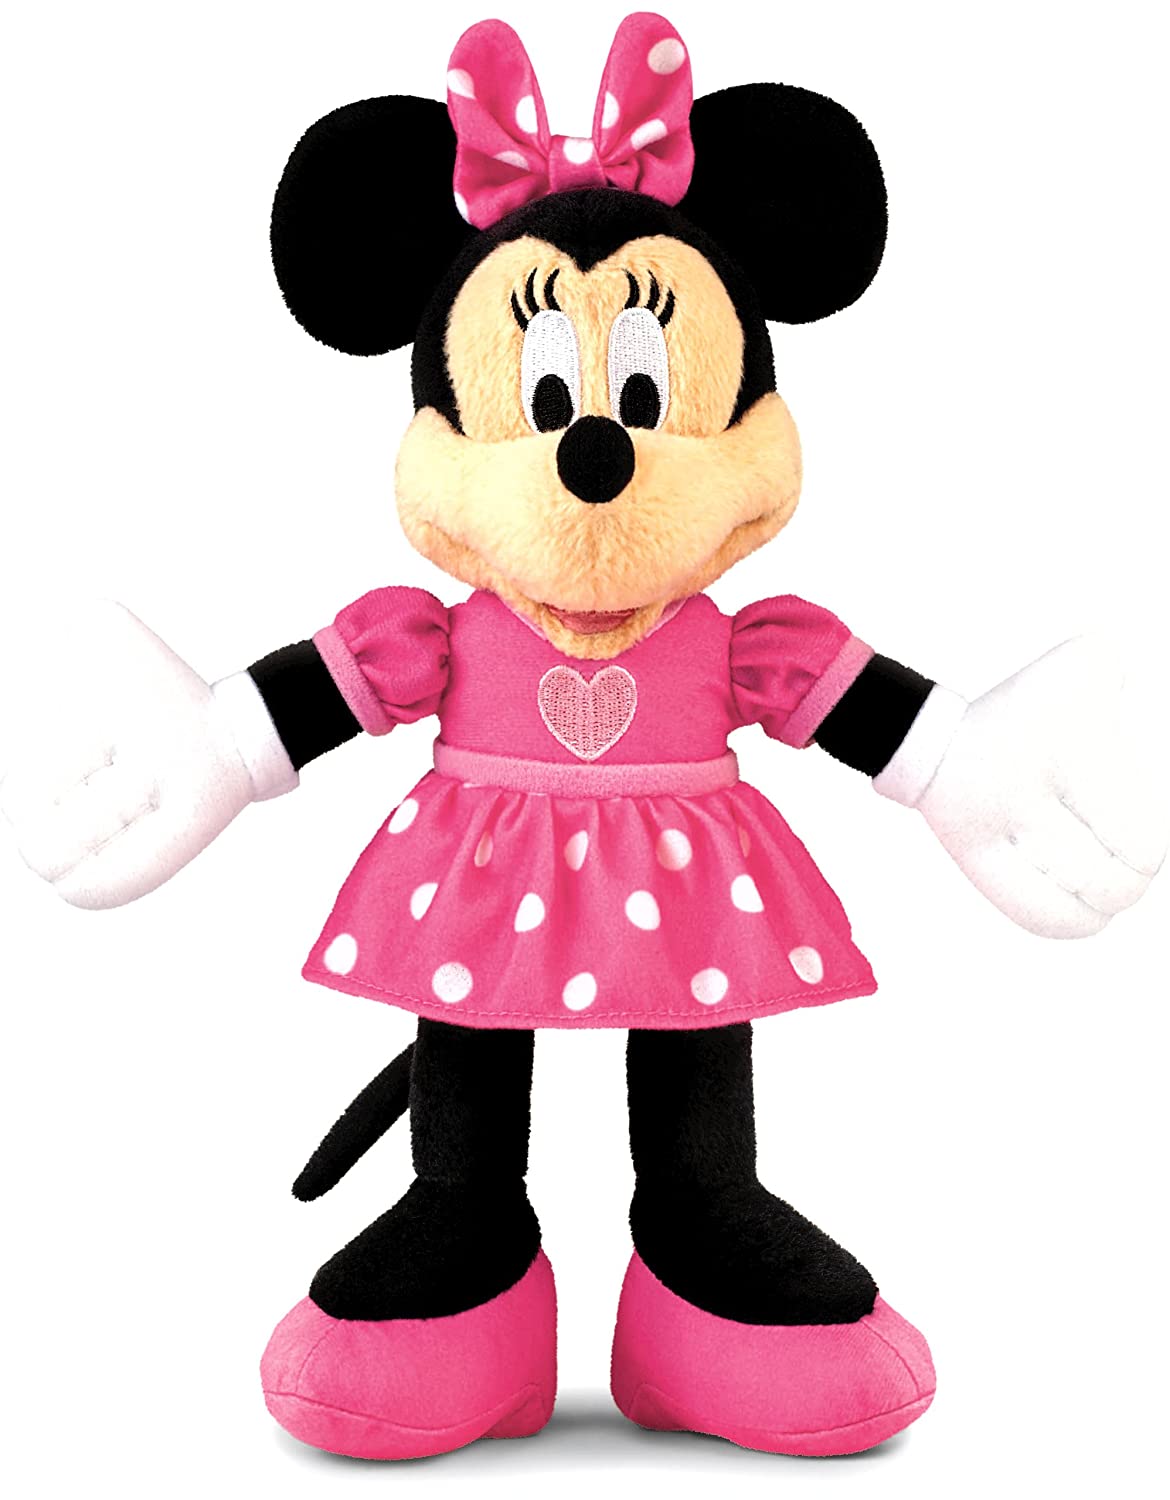 Fisher-Price Disney's Minnie Mouse Plush Singer